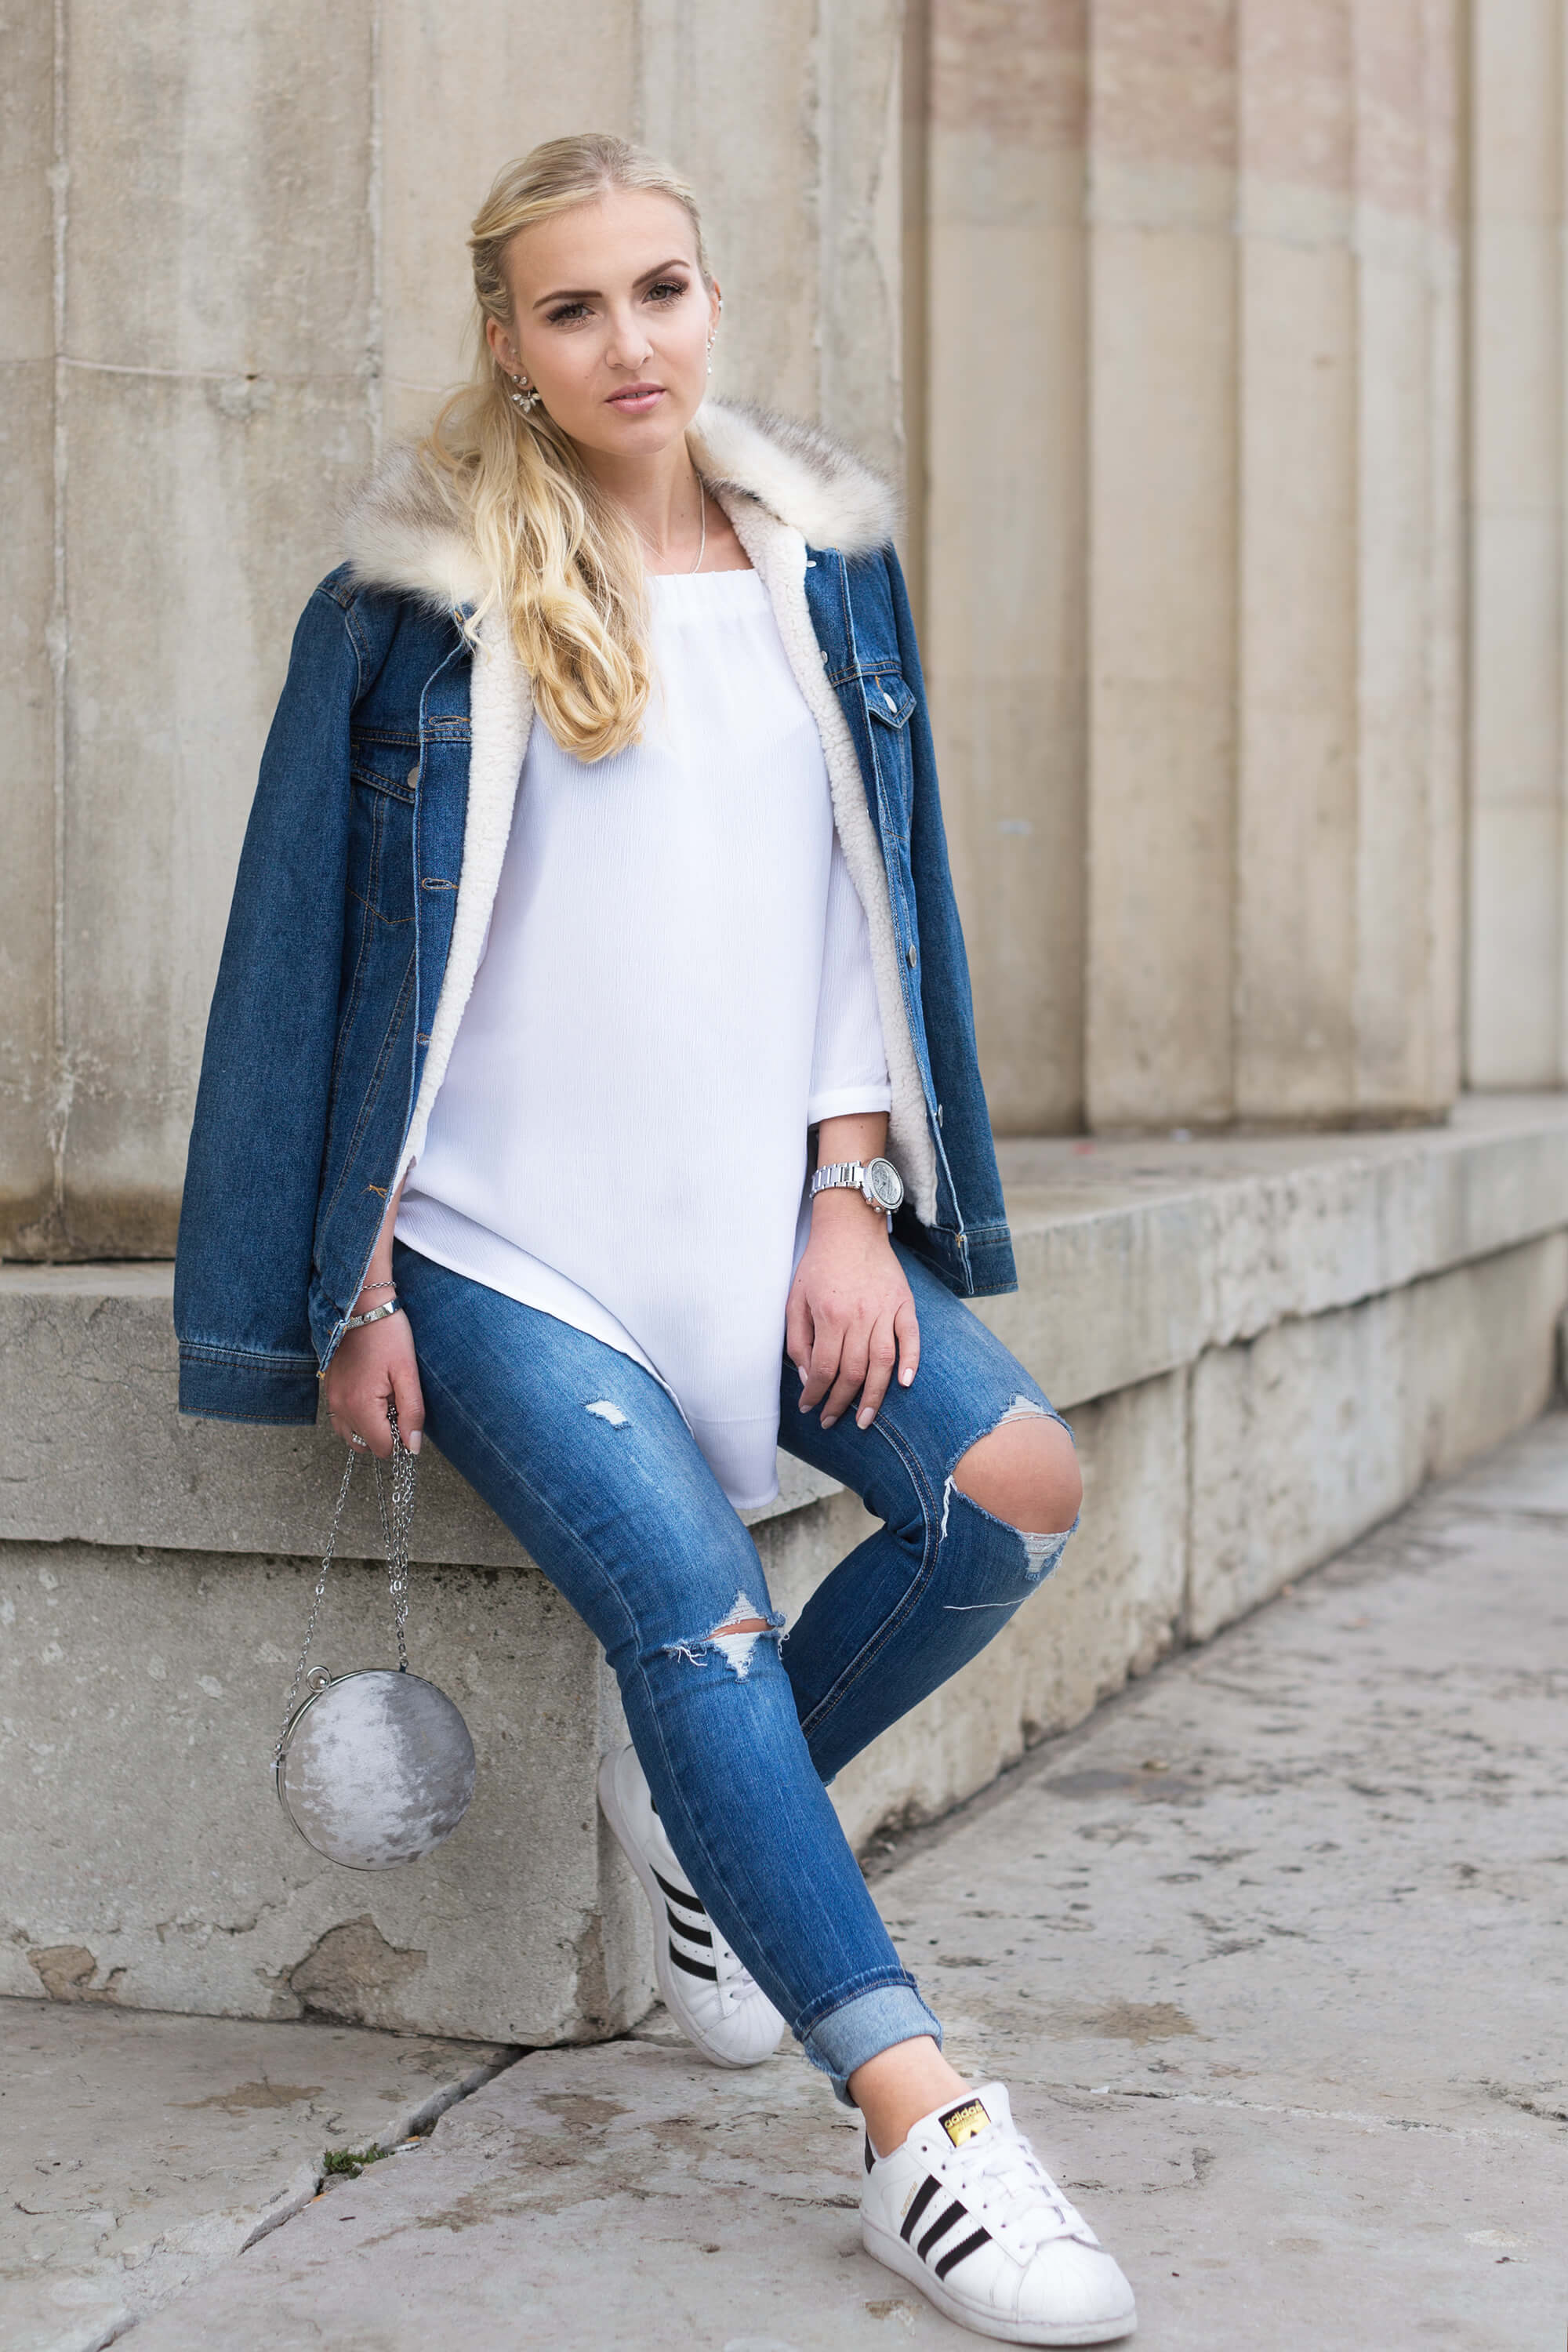 Double Denim Look Jeans richtig kombinieren Fashion Blog Katefully